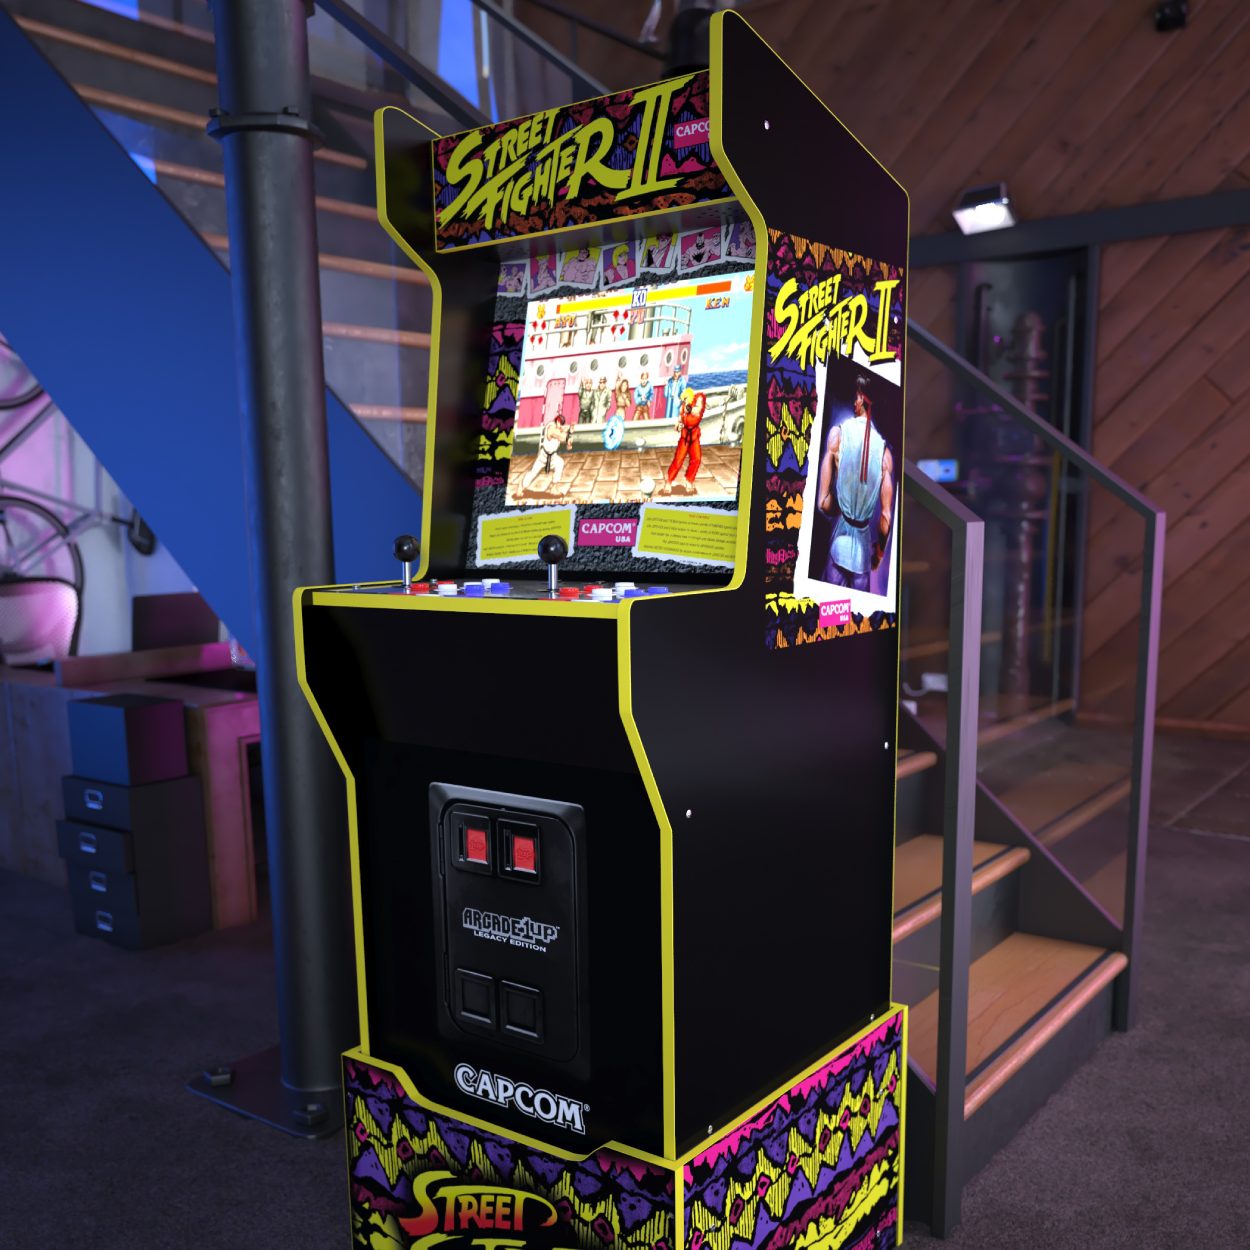 Street Fighter Capcom 12-in-1 Arcade Machine